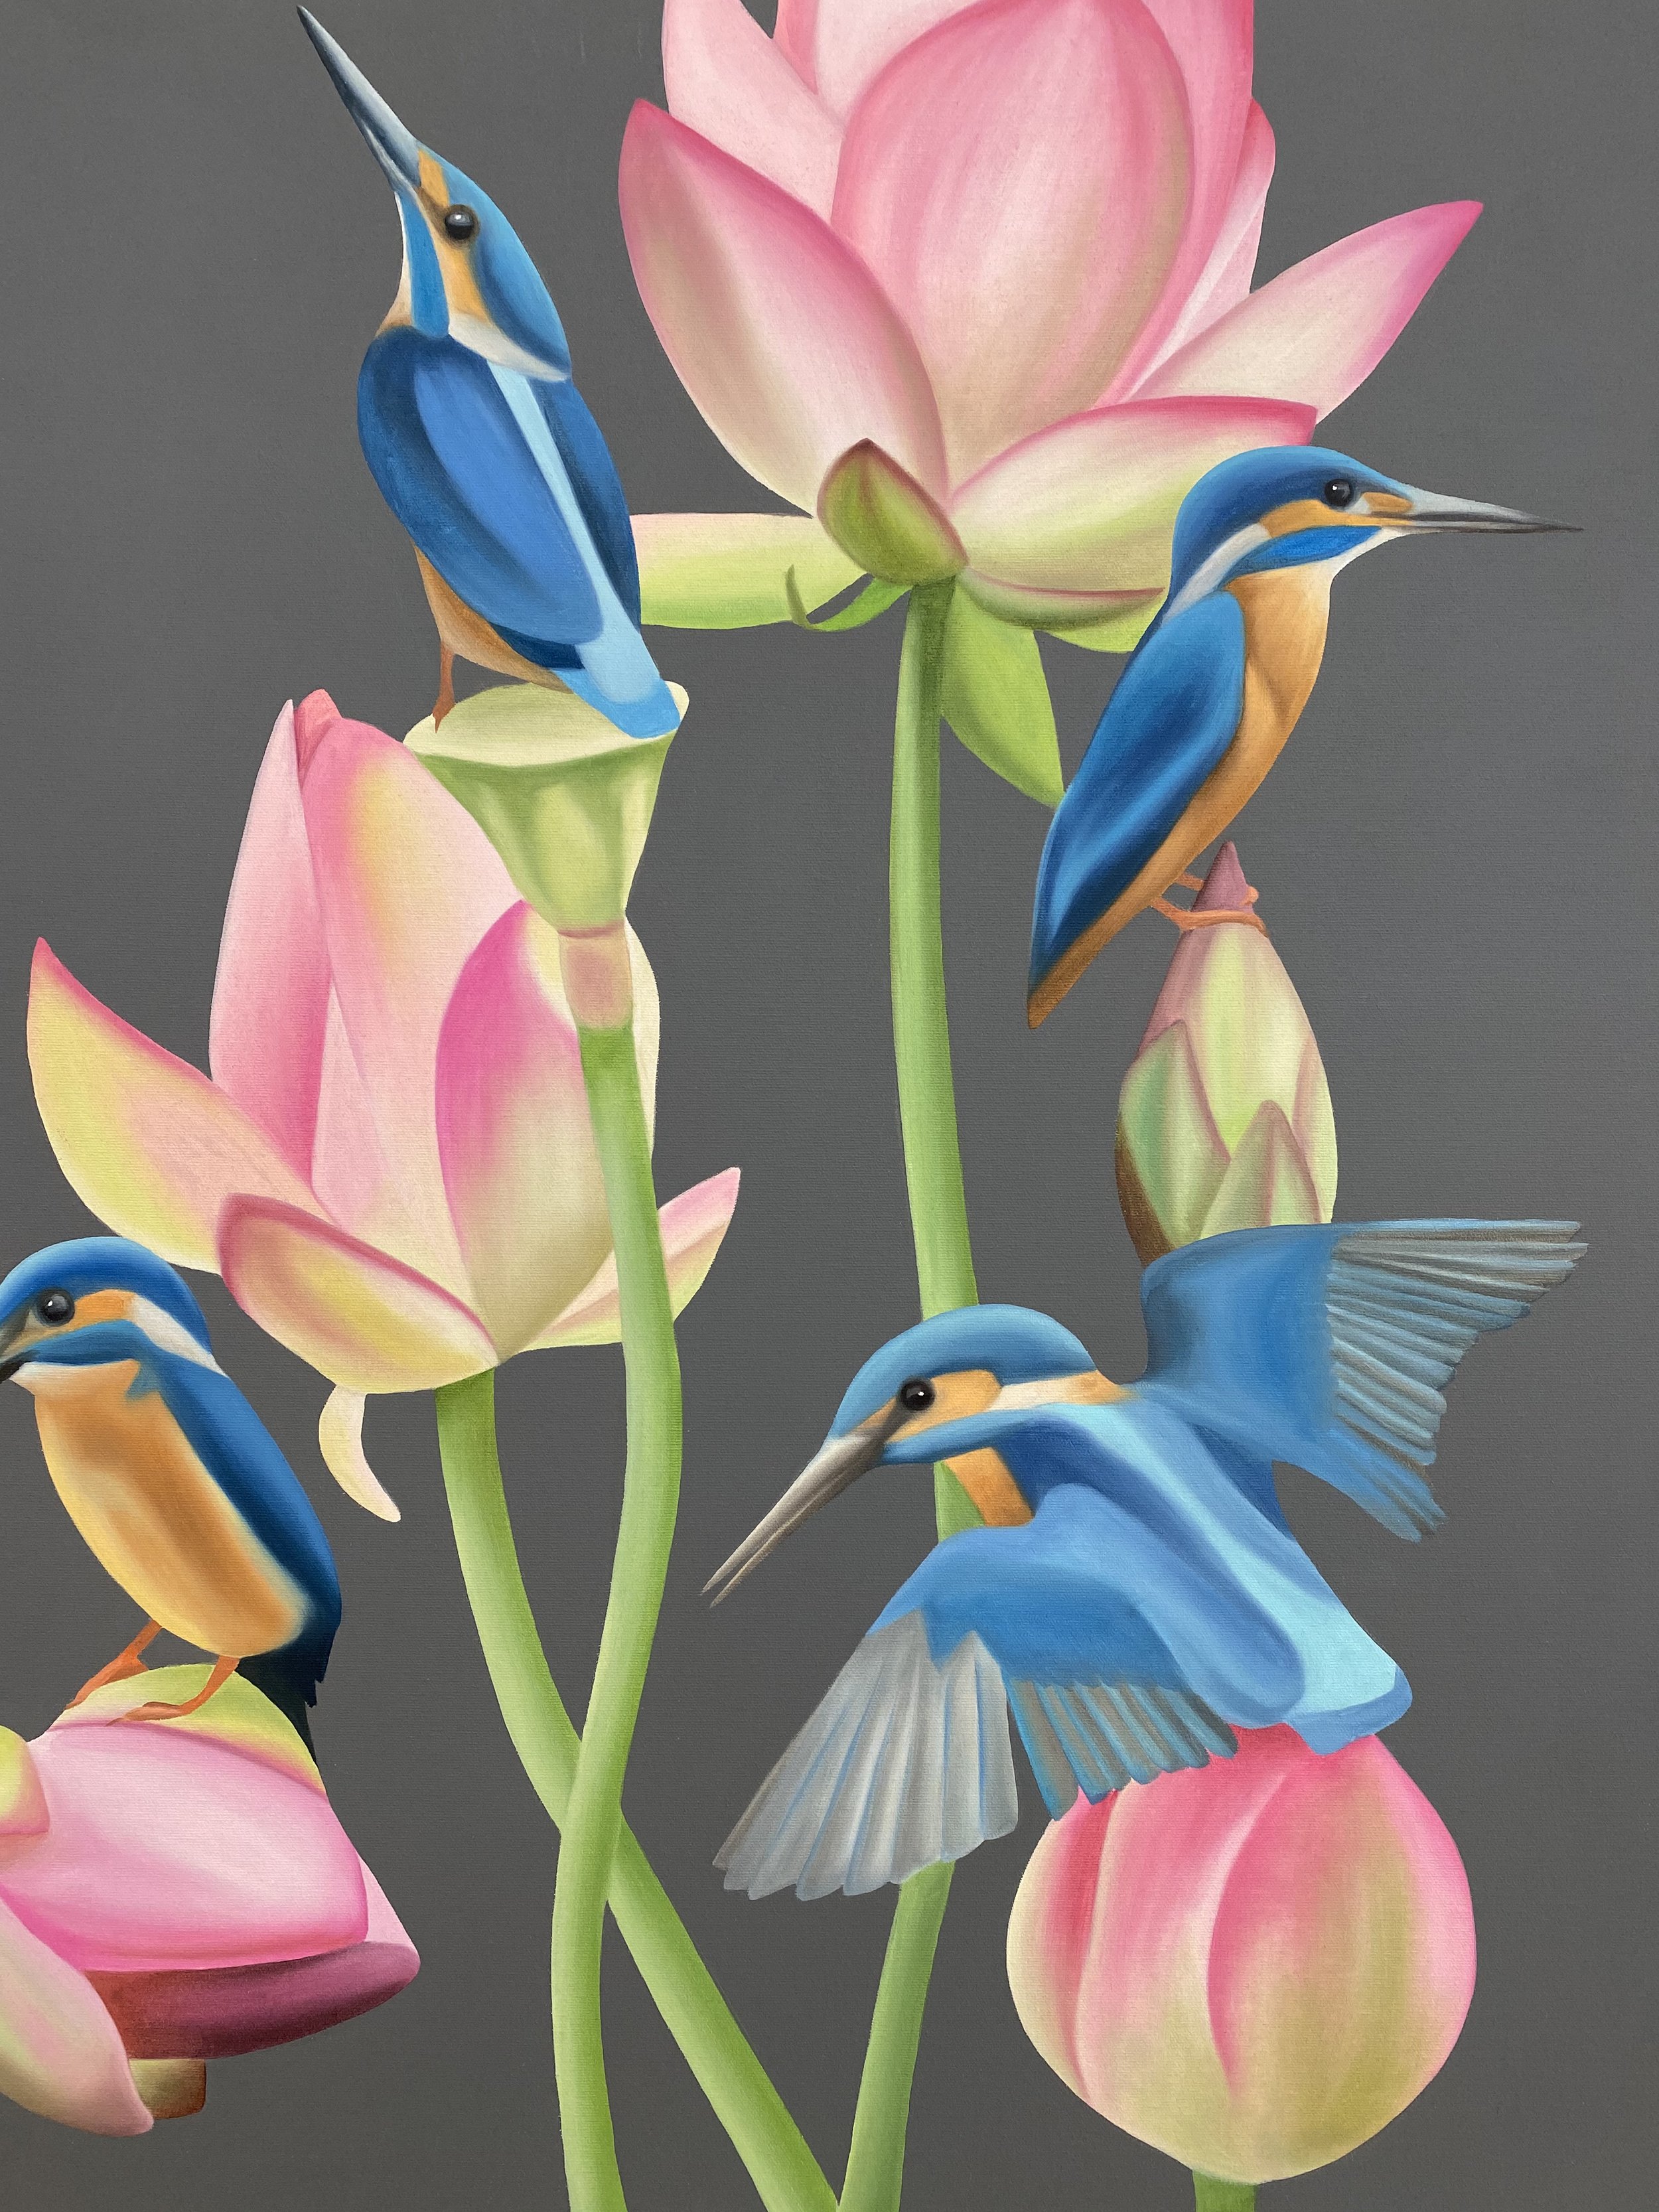 Artwork_detail_3_Kingfishers_pink-lotuses-blue-kingfisher-bird-painting_artist_Ildze Ose.jpeg